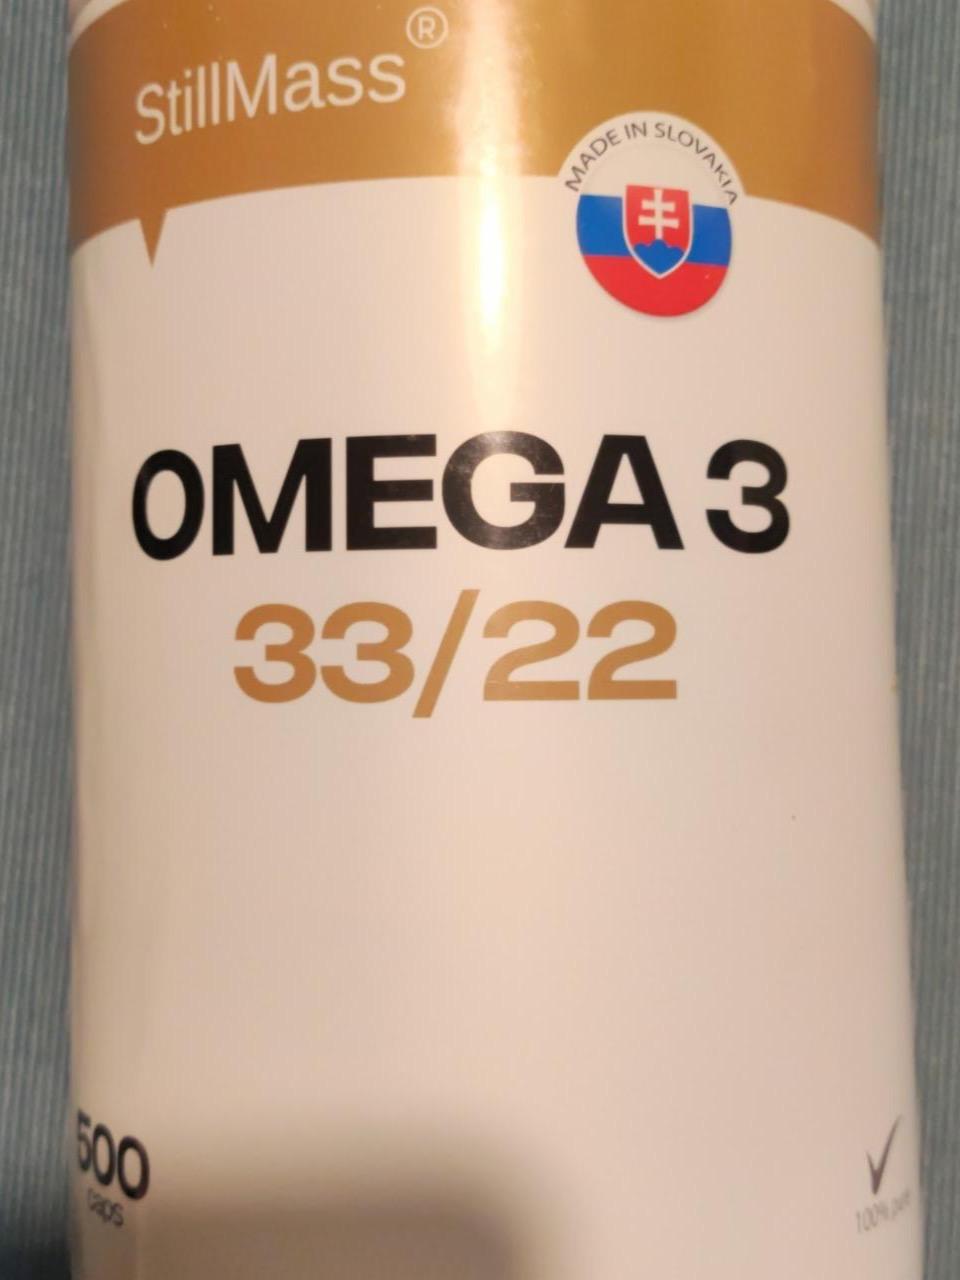 Képek - Omega 3 33/22 StillMass